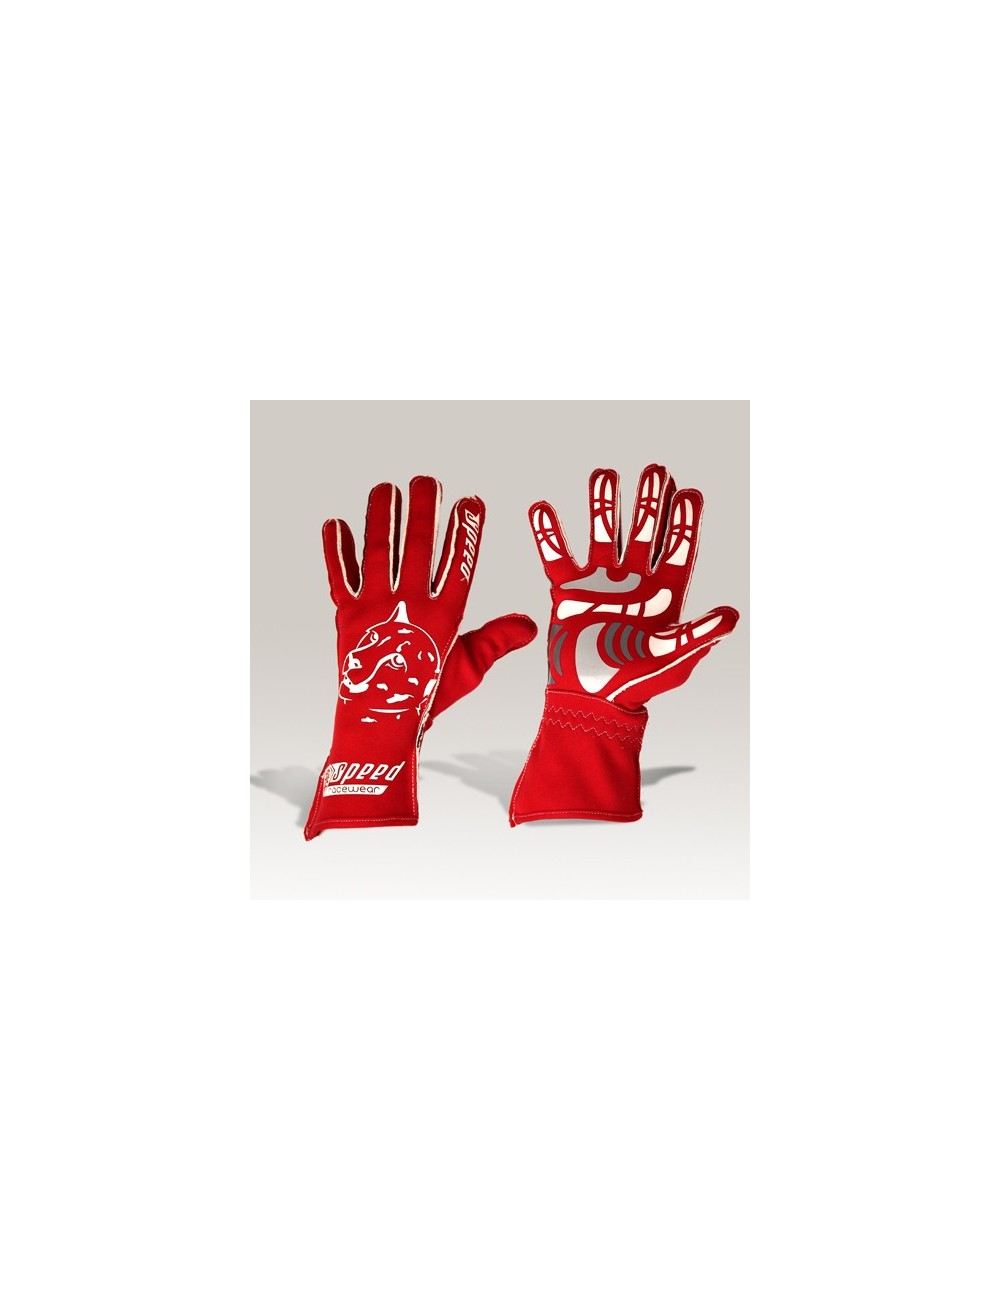 Speed gants  Melbourne G-2 rouge-blanc